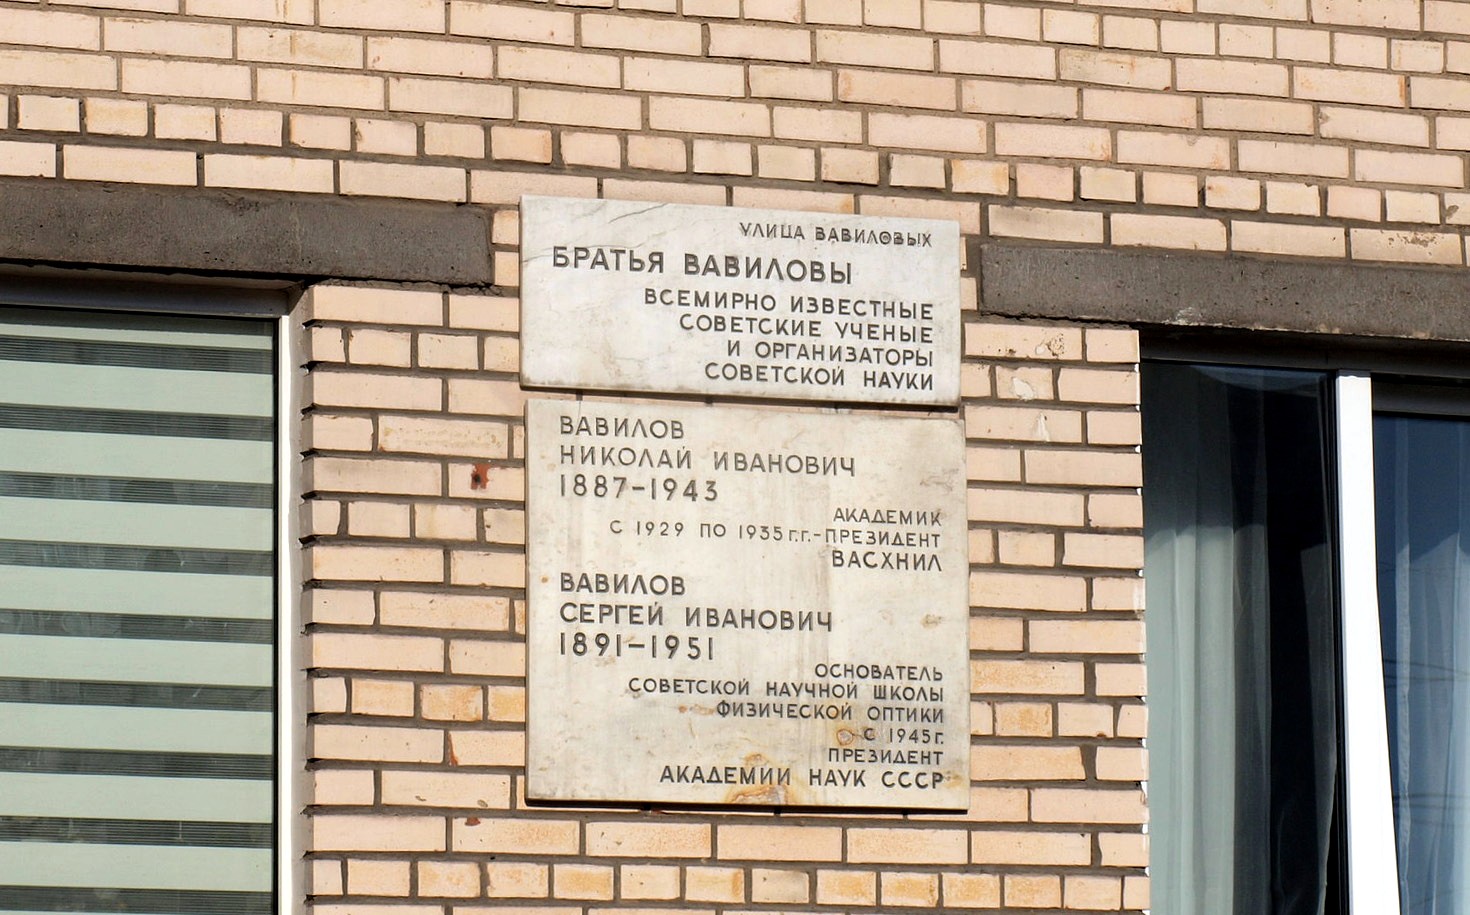 Petersburg, Улица Вавиловых, 4 корп. 1 (подъезд 5). Petersburg — Memorial plaques